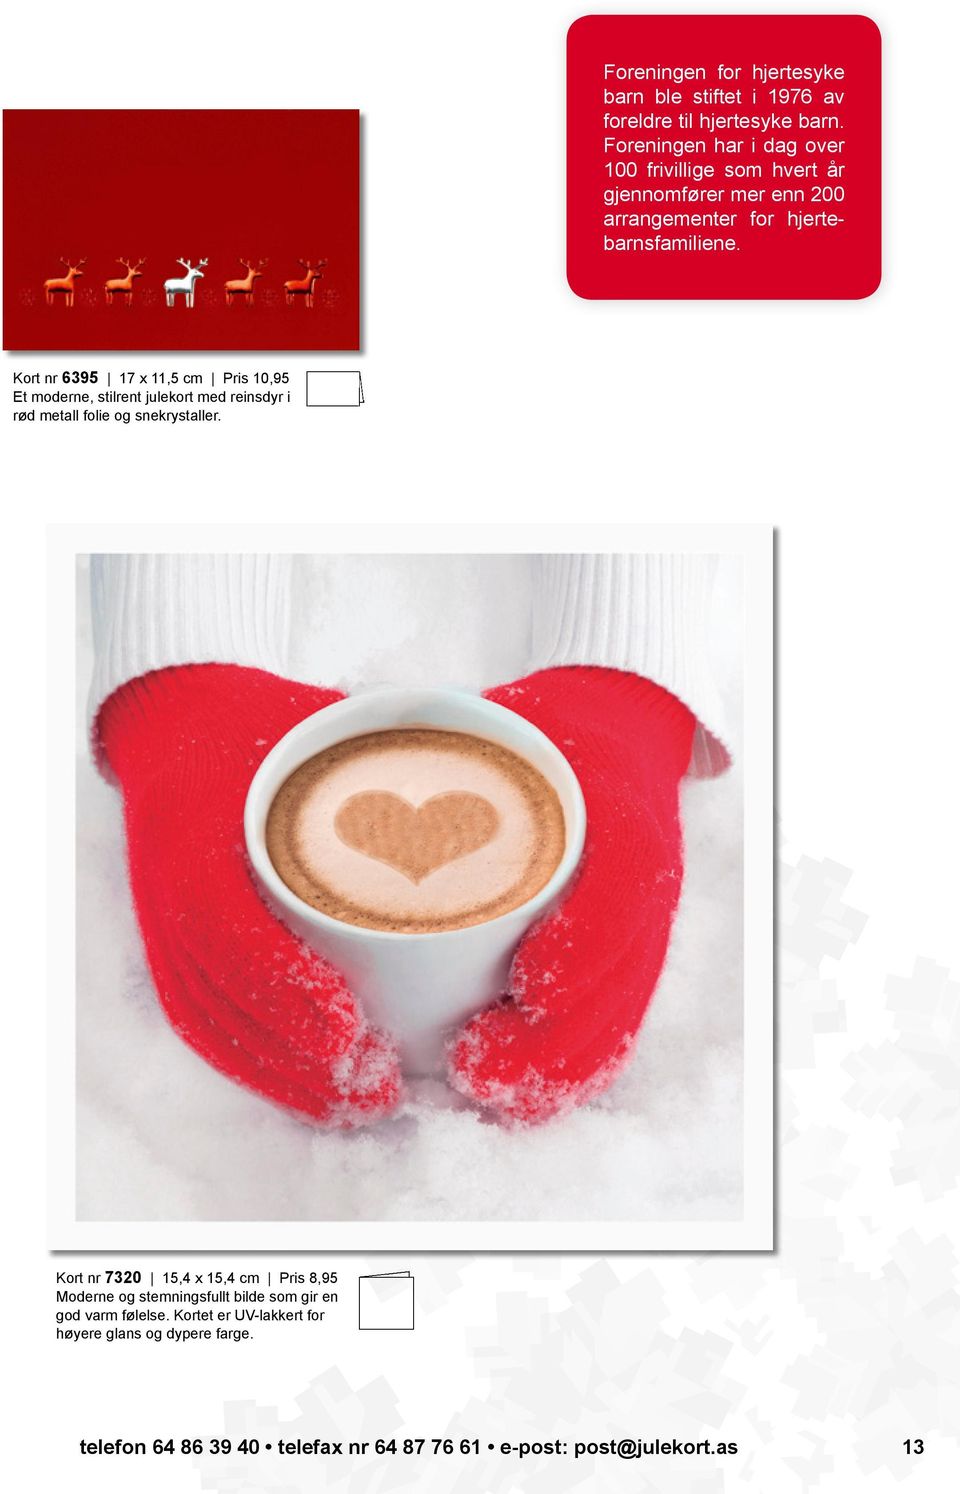 Kort nr 6395 17 x 11,5 cm Pris 10,95 Et moderne, stilrent julekort med reinsdyr i rød metall folie og snekrystaller.